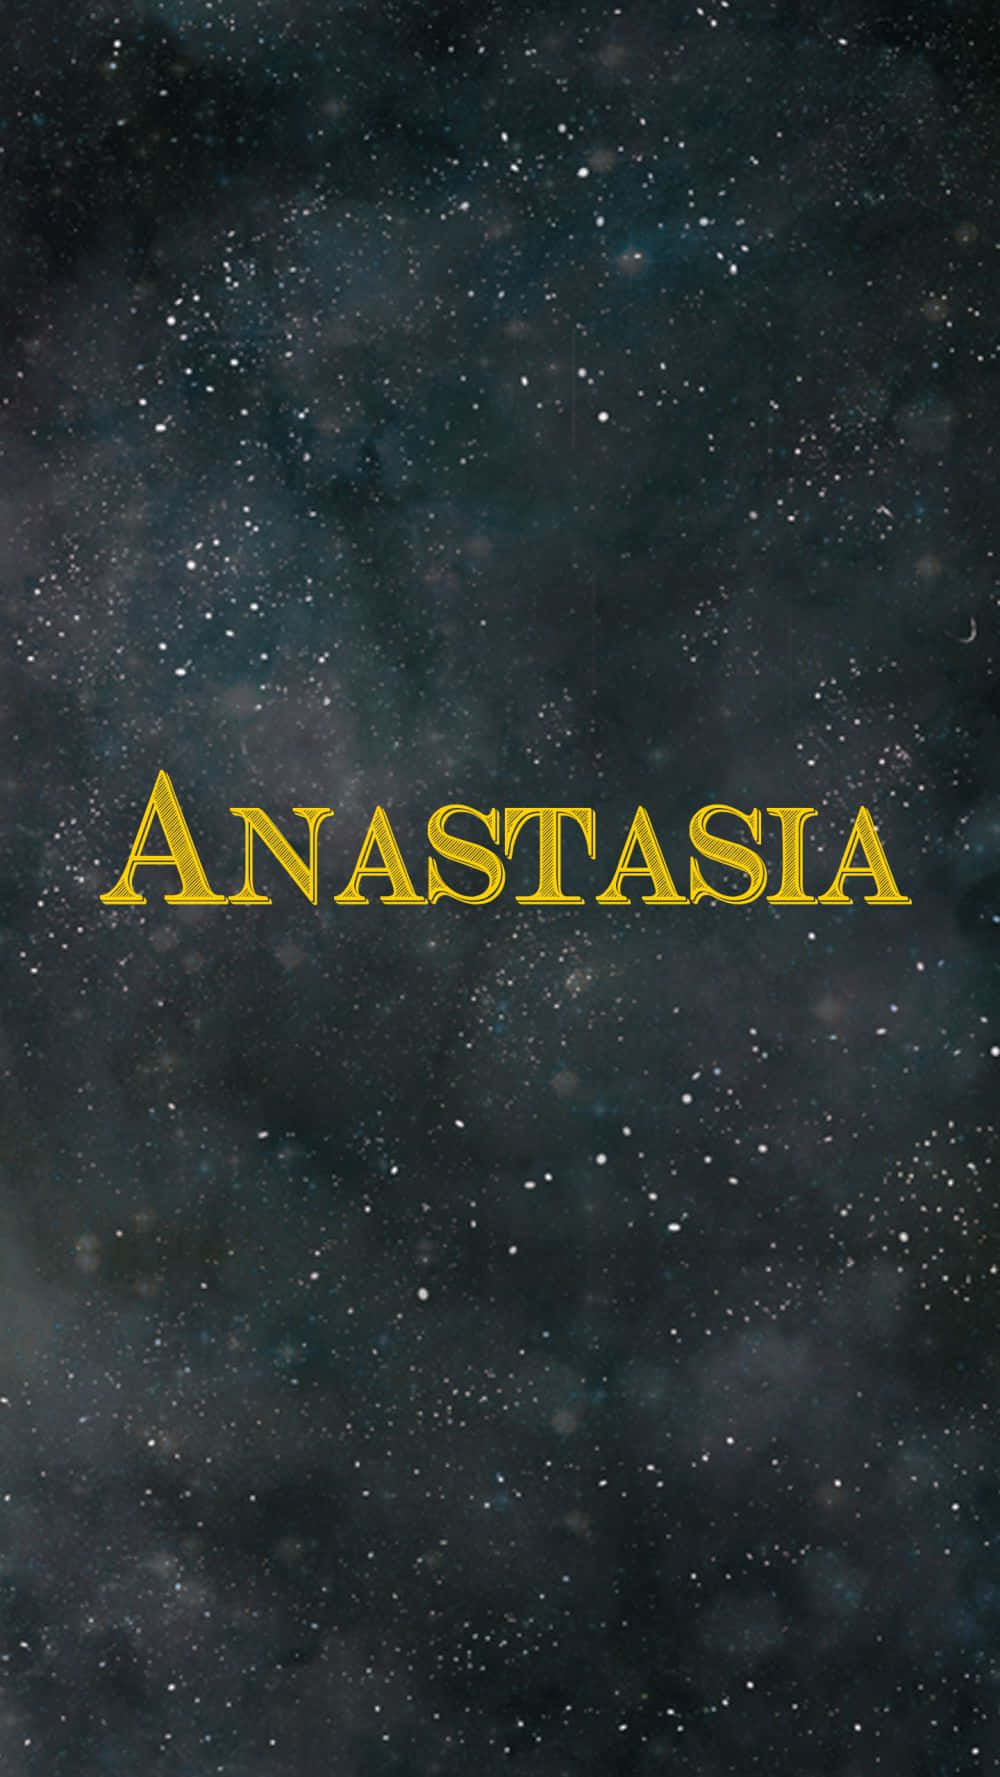 Anastasiabilder